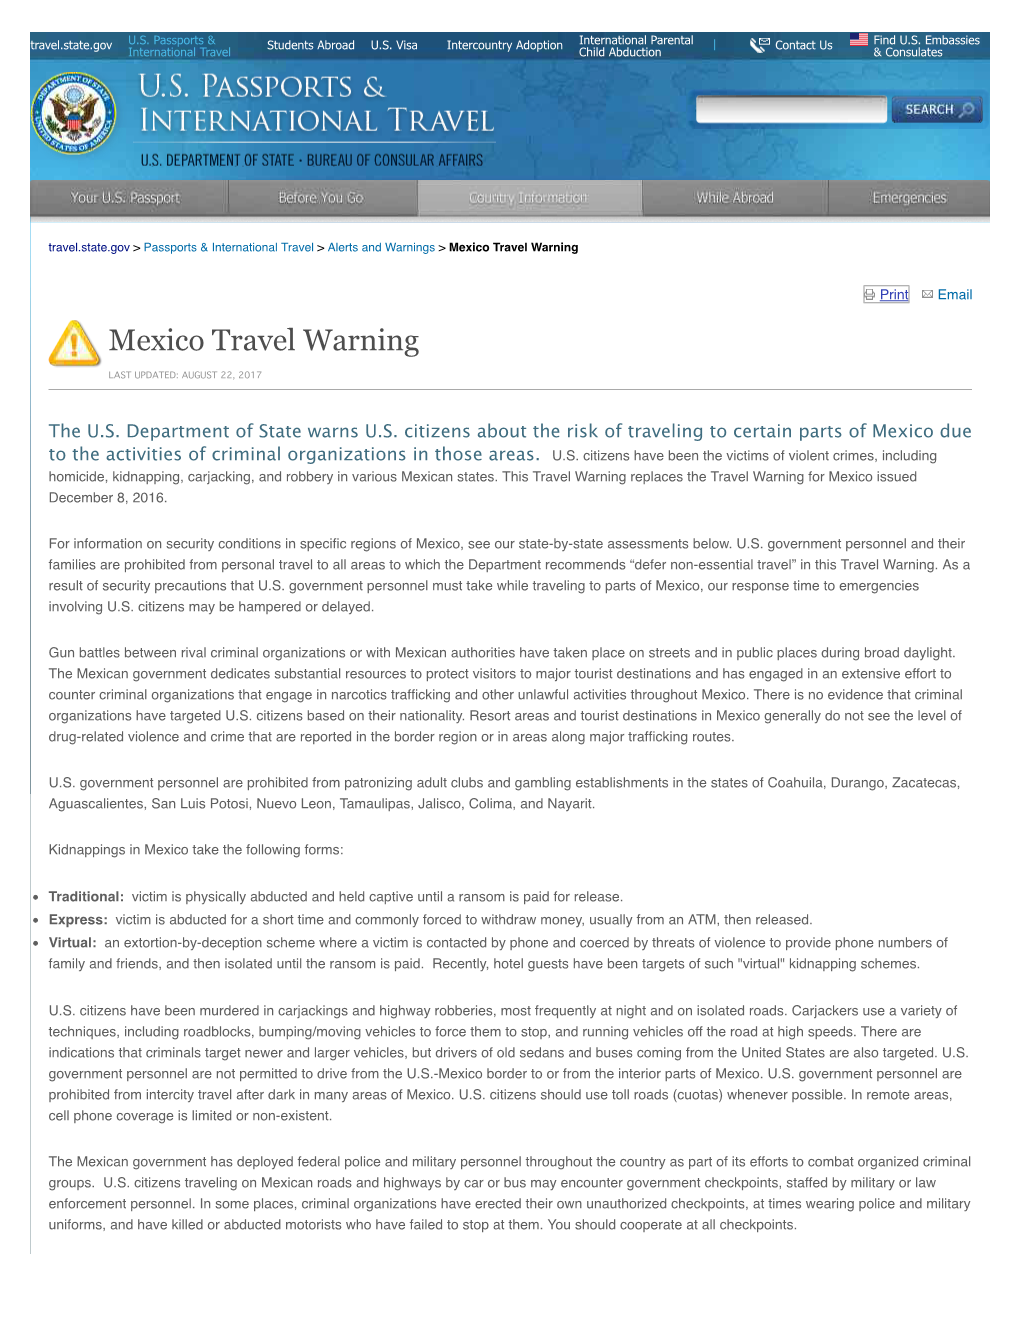 Mexico Travel Warning